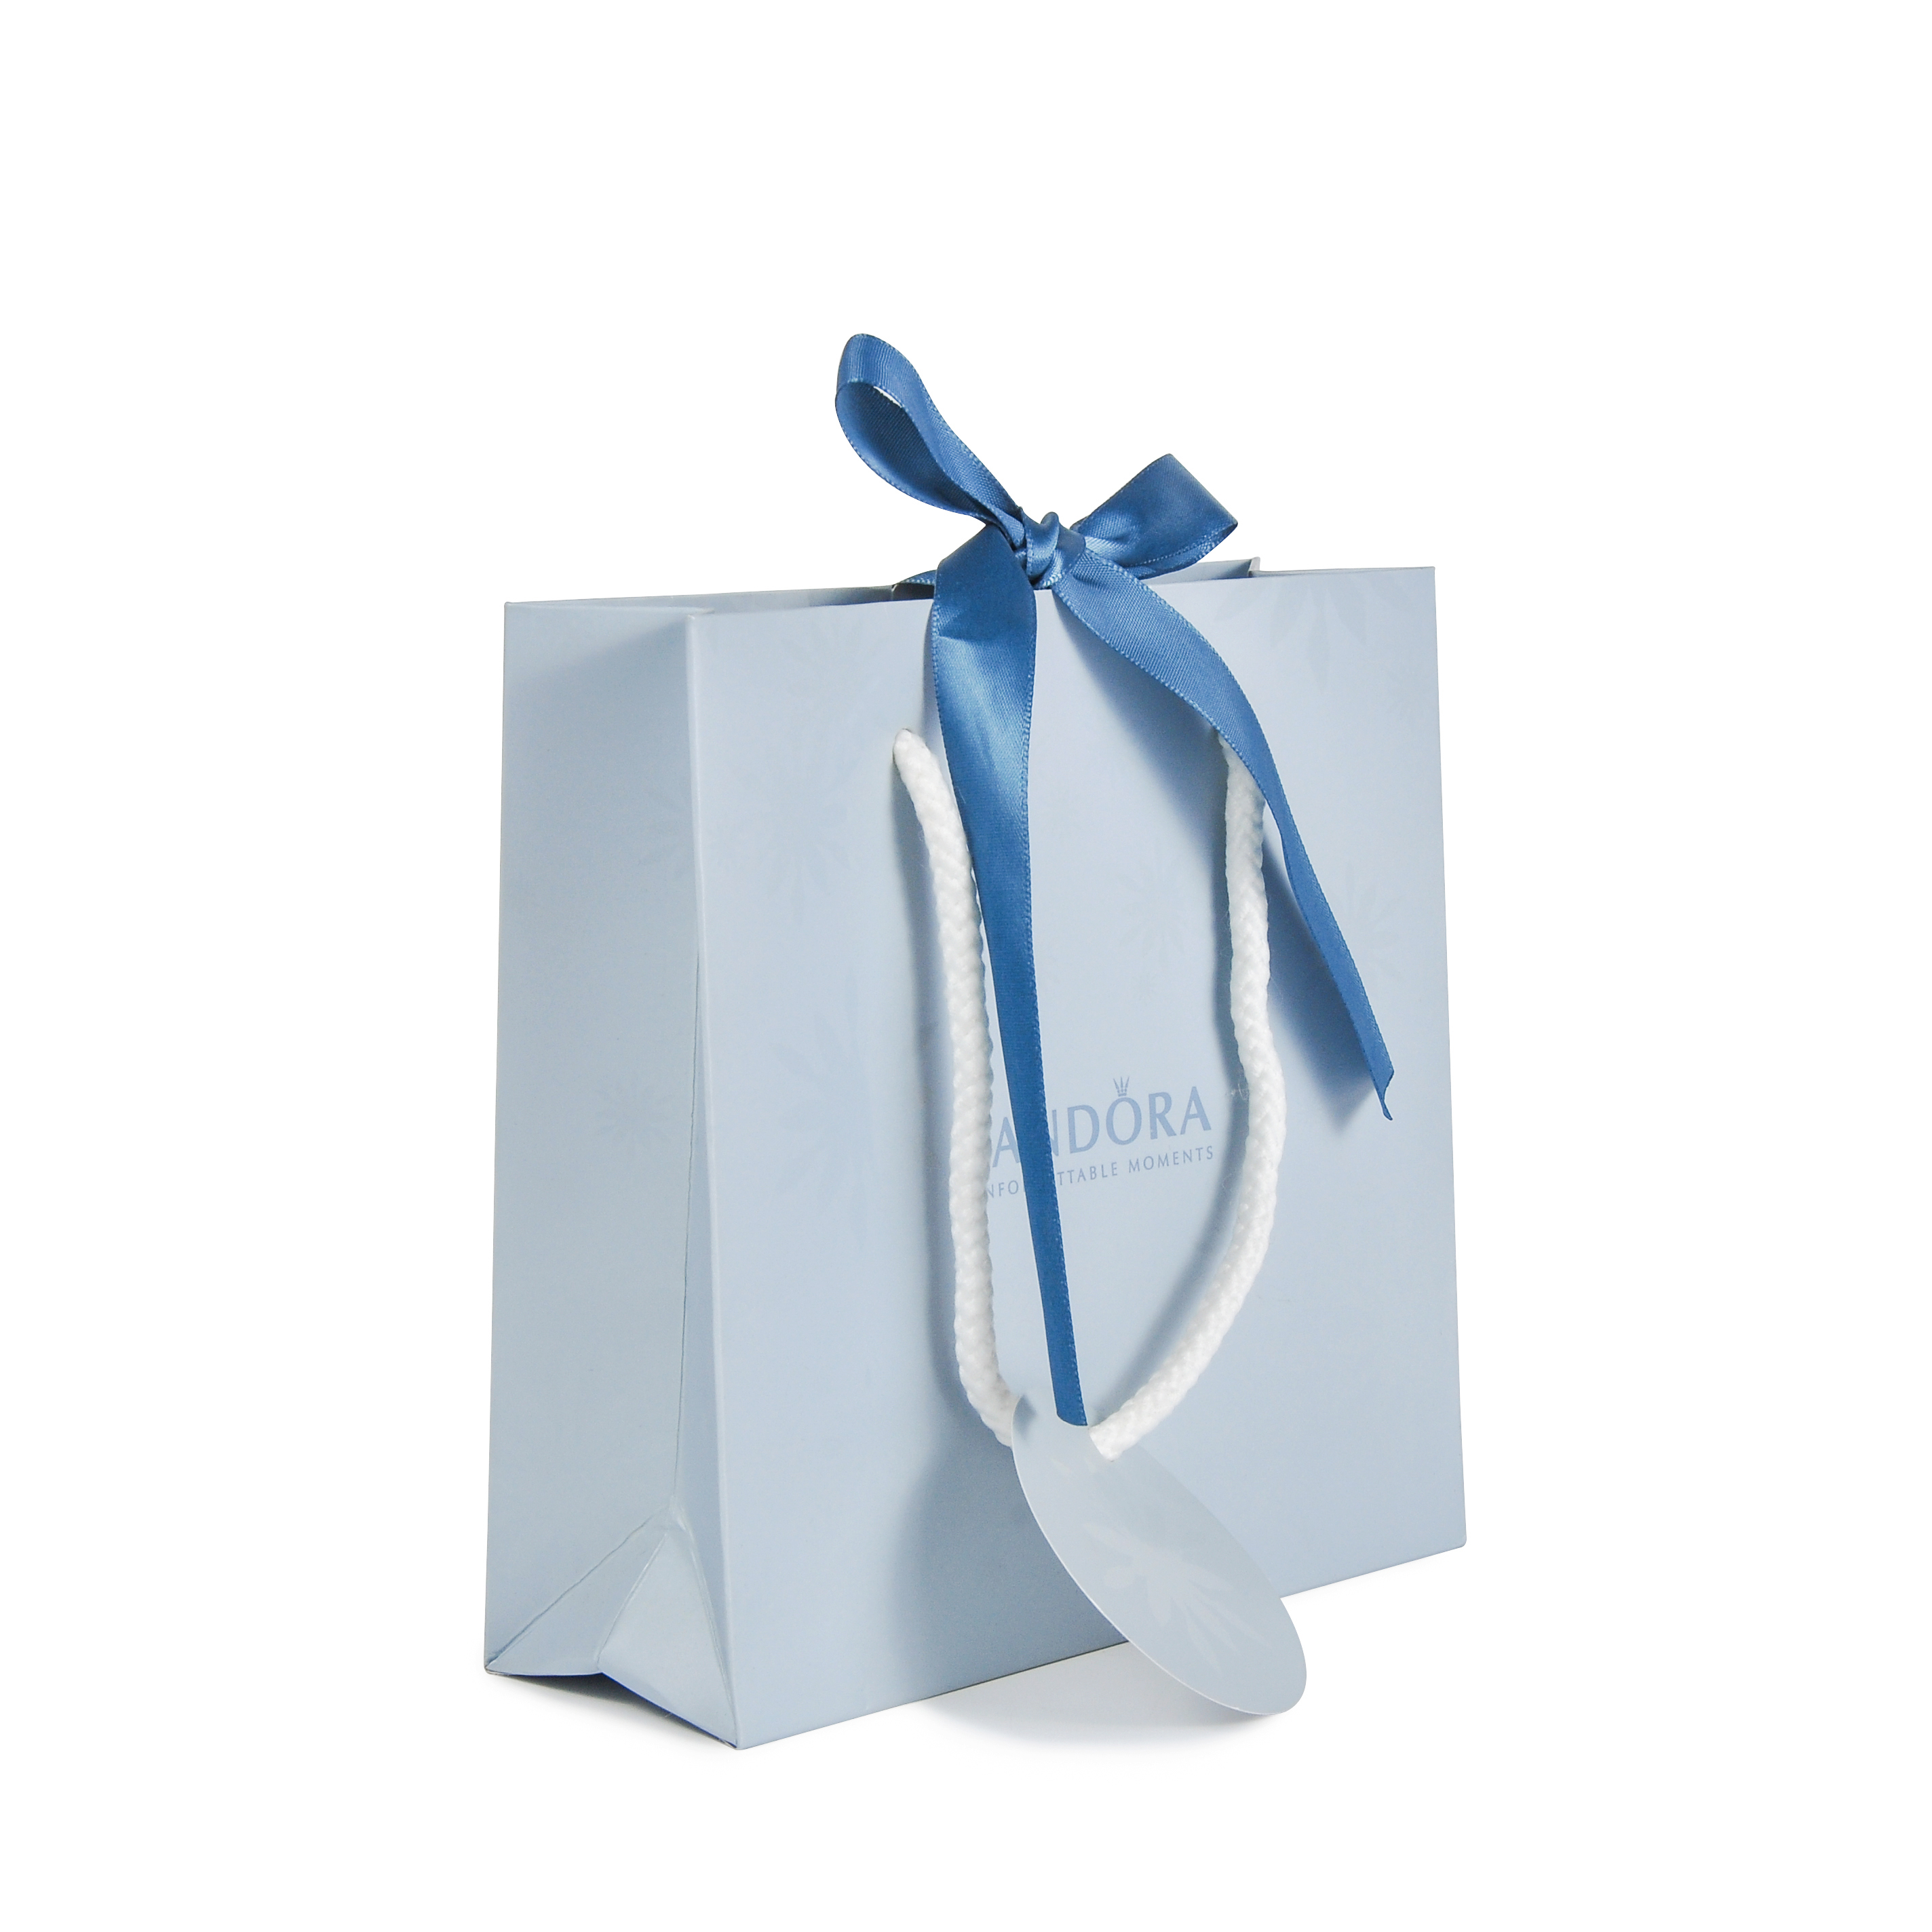 Wholesale UV Paper Bag Gift Bag Shopping Craft Handbag with Ribbon Closure and Cotton Rope Handle